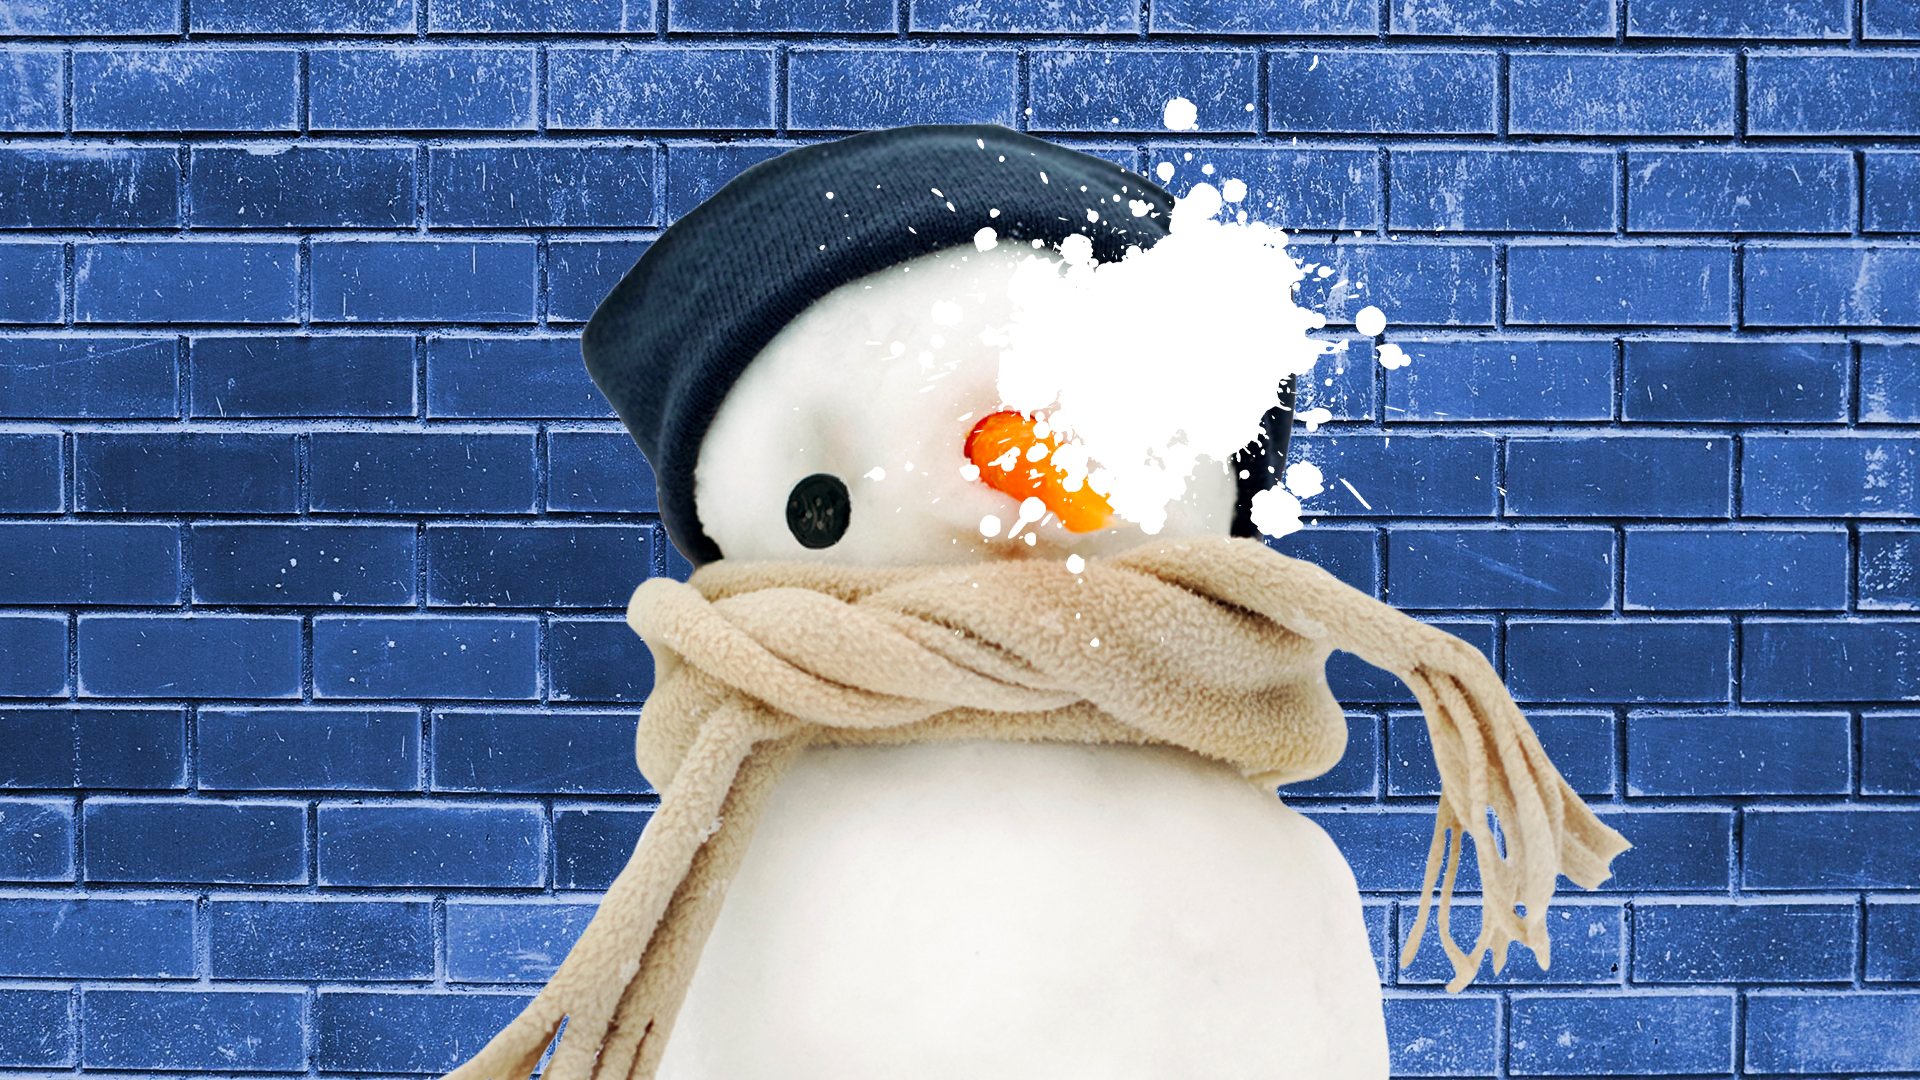 A snowman hit with a snowball